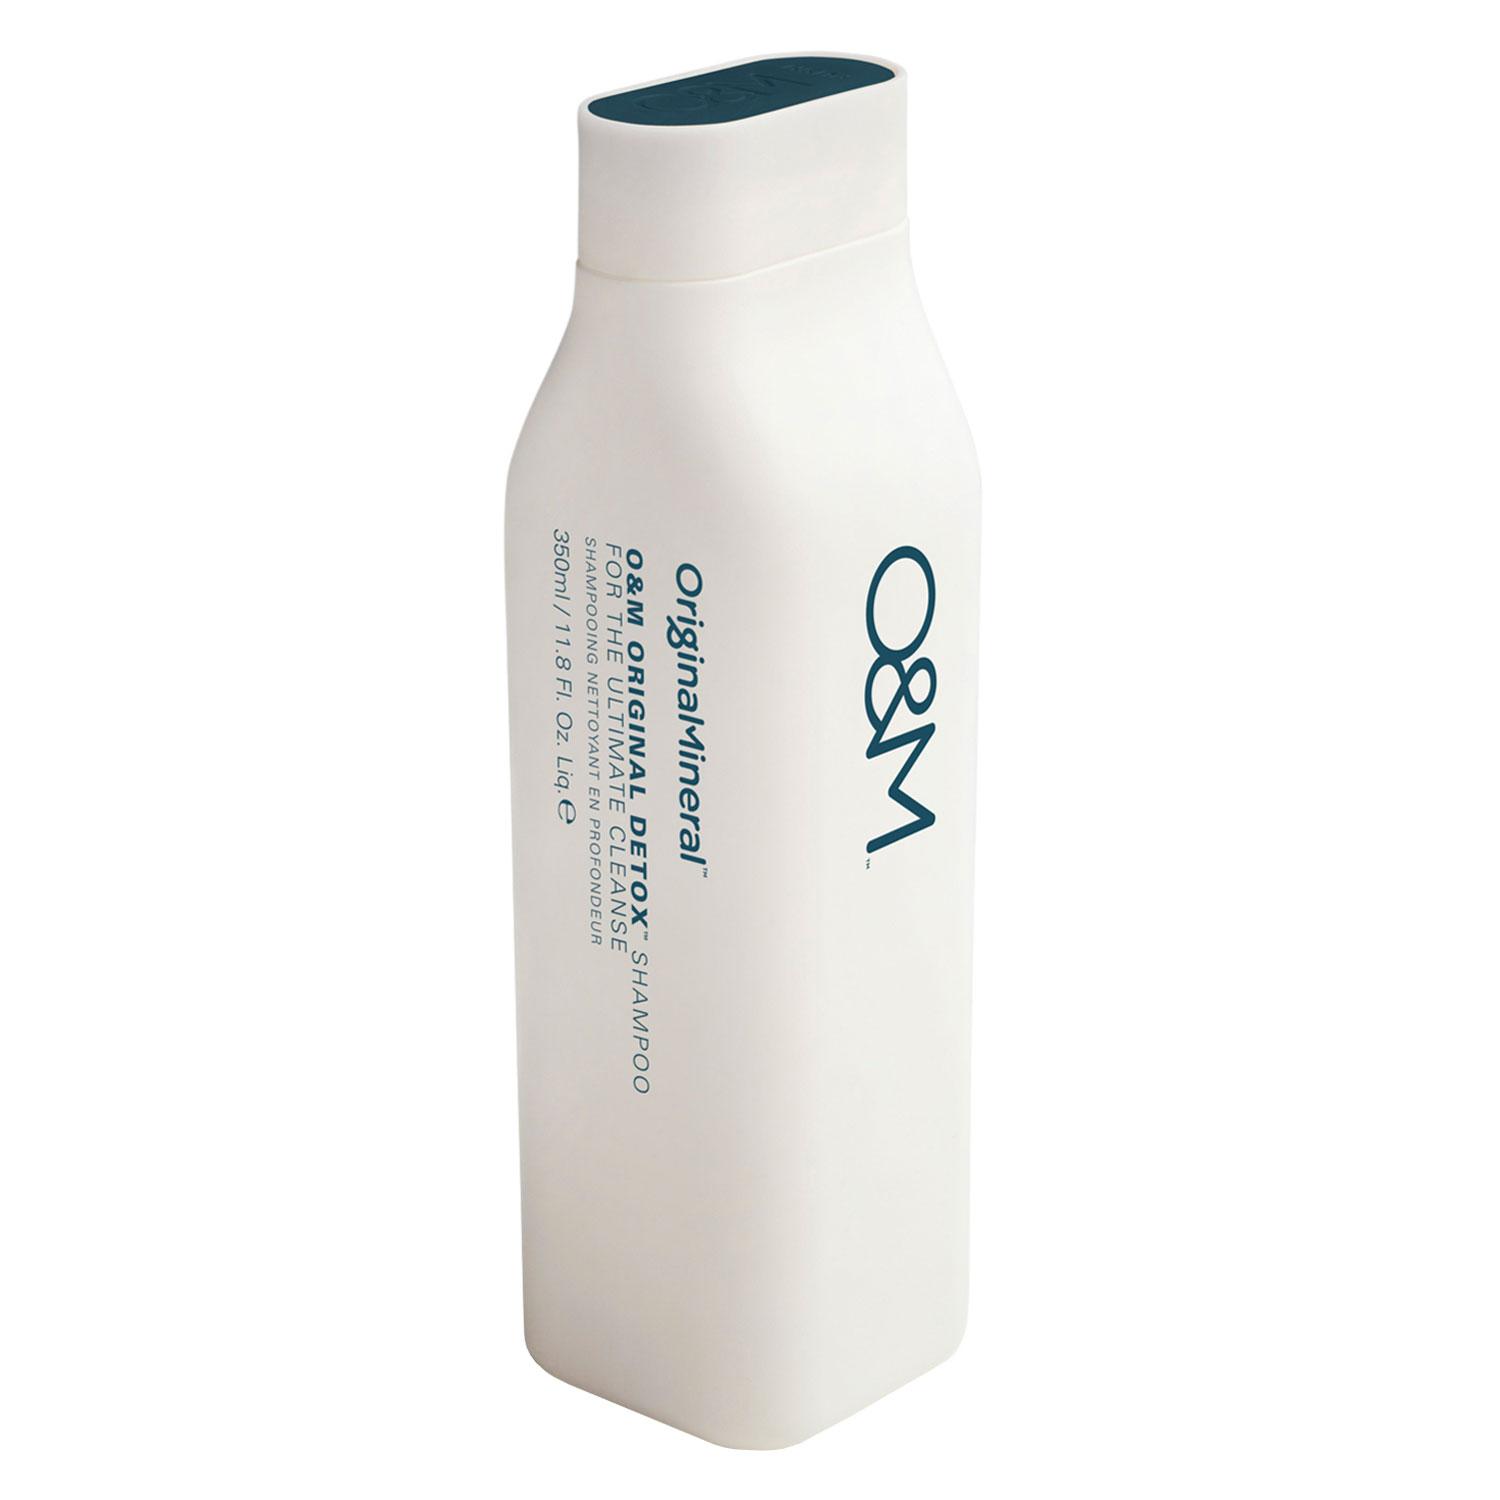 O&M Haircare - Original Detox Cleanse Shampoo